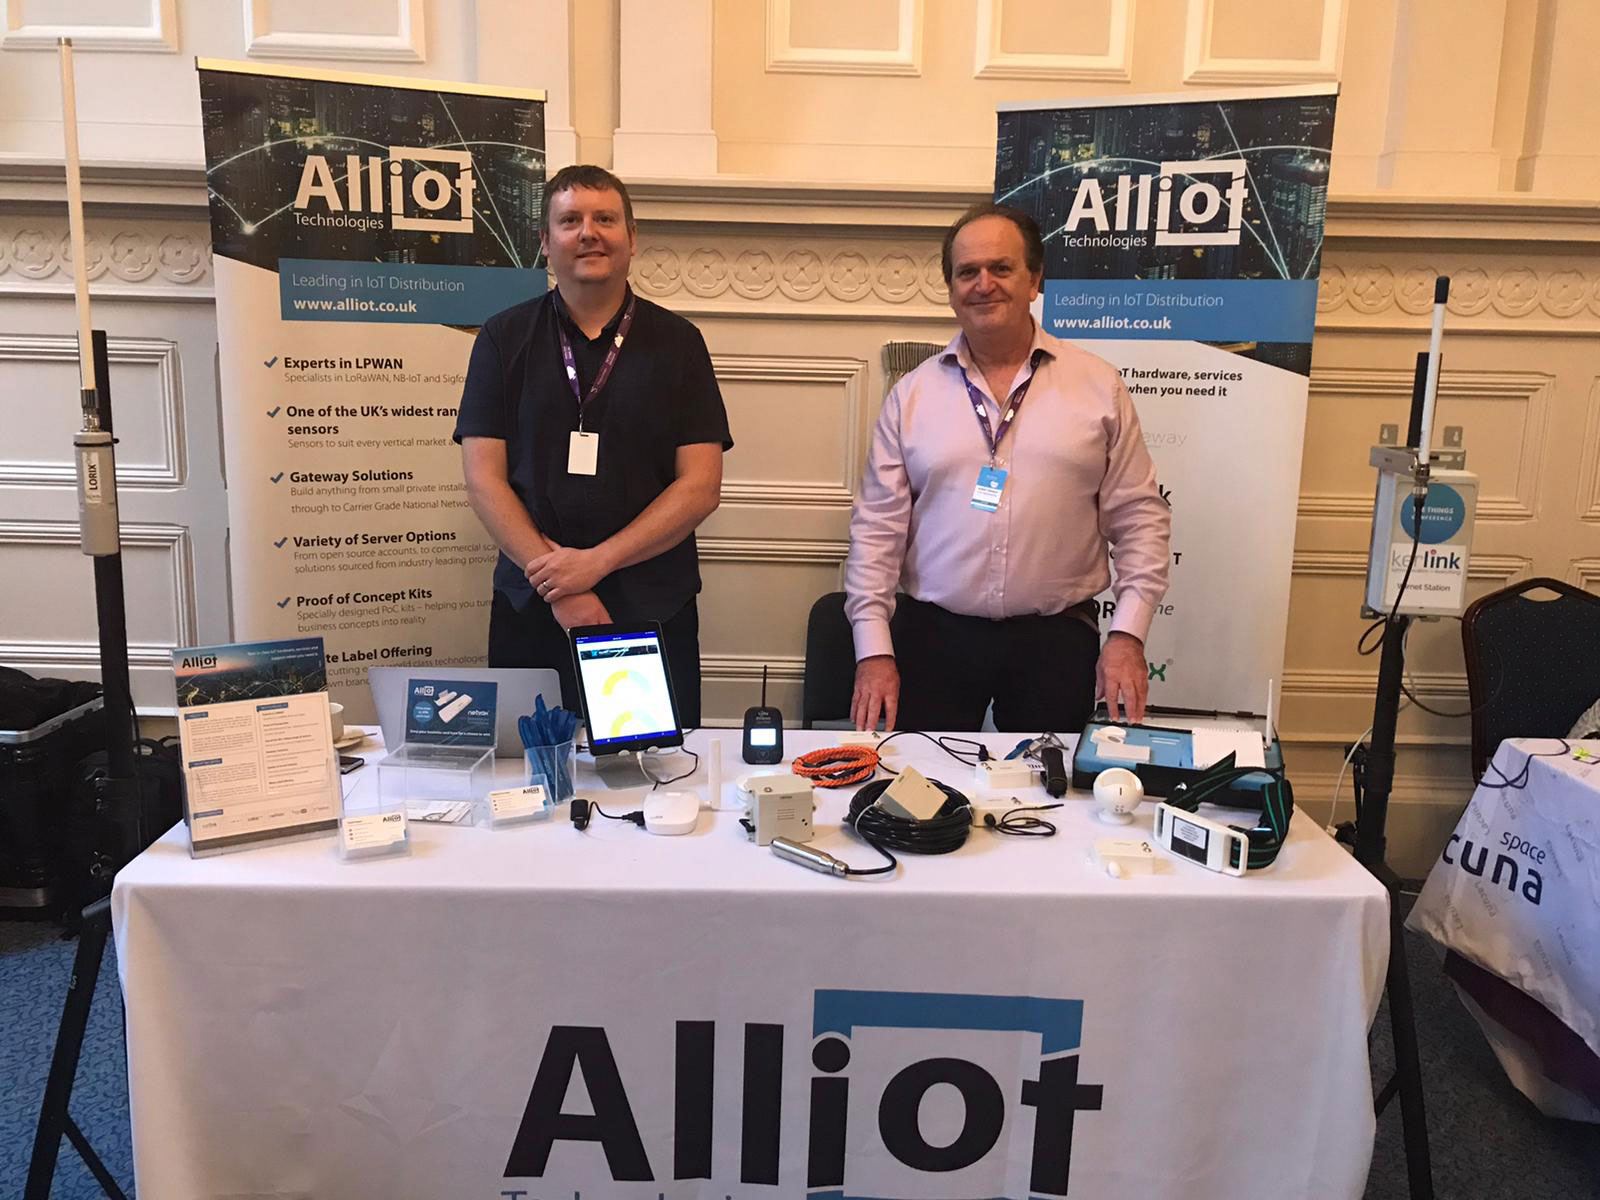 AllIoT Technologies stand